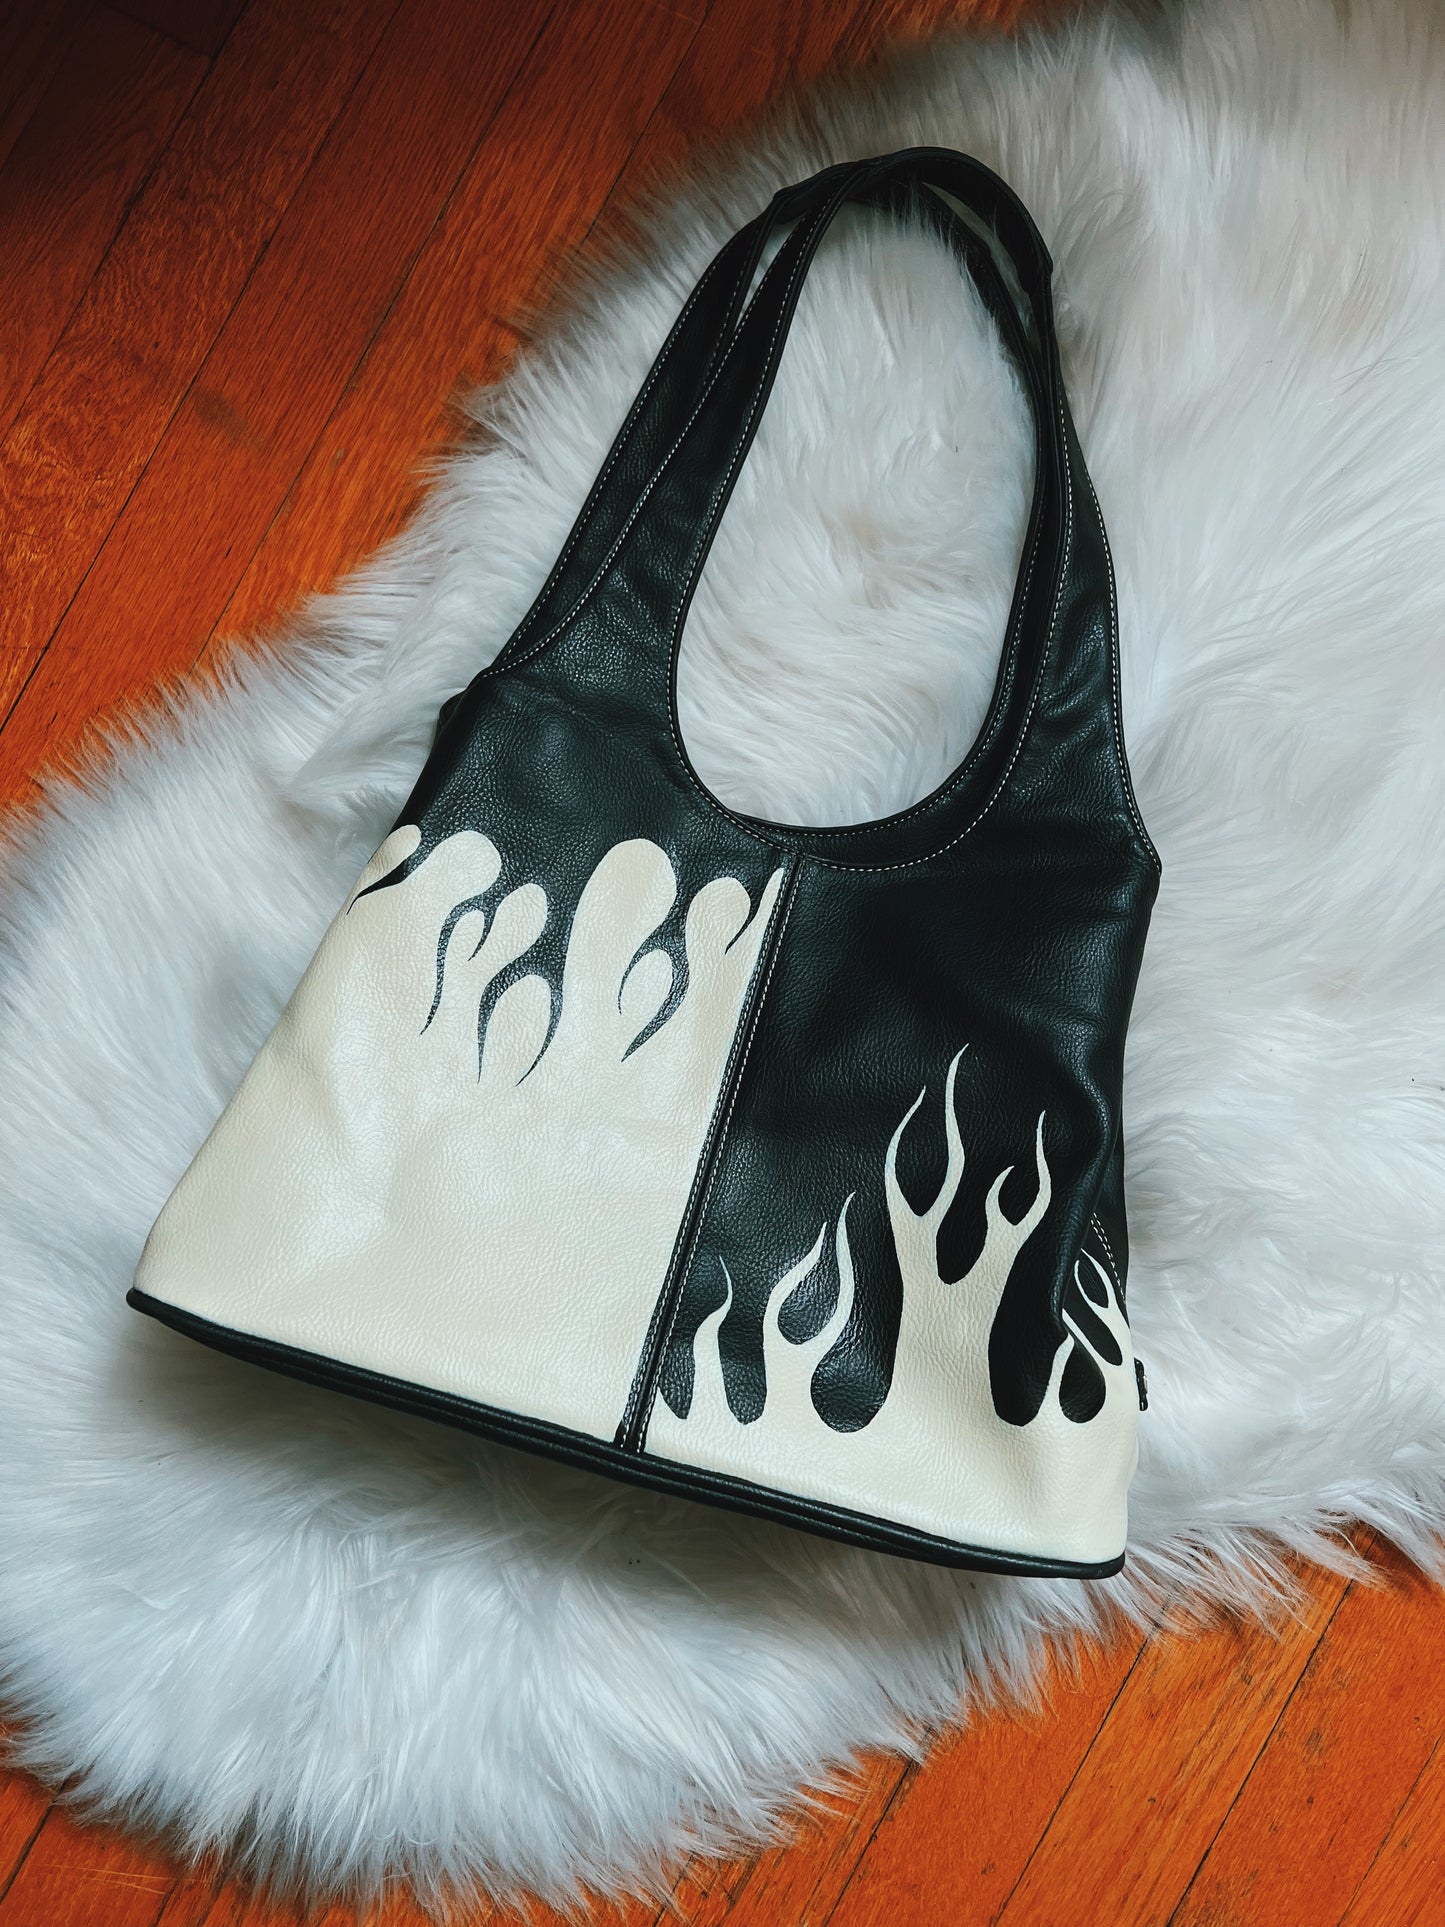 The Inferno Bag